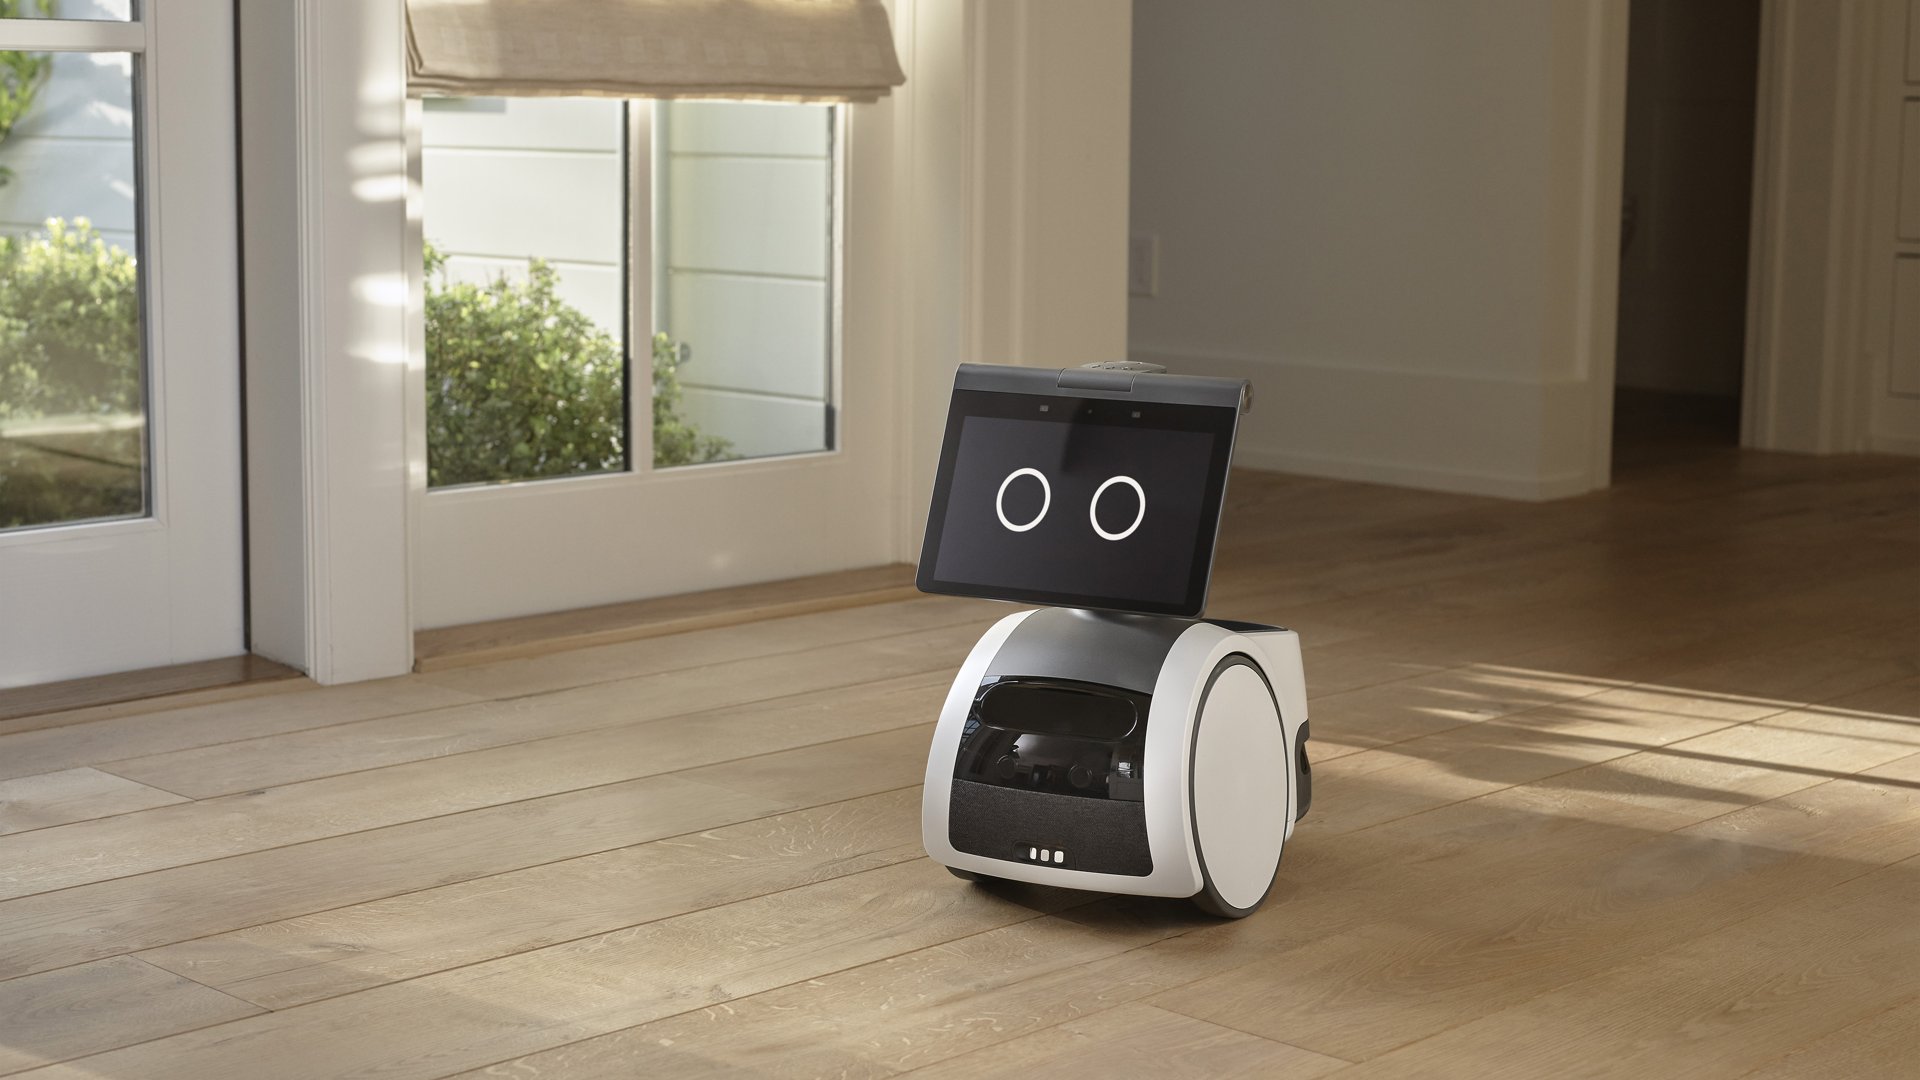 Robot doméstico Amazon Astro